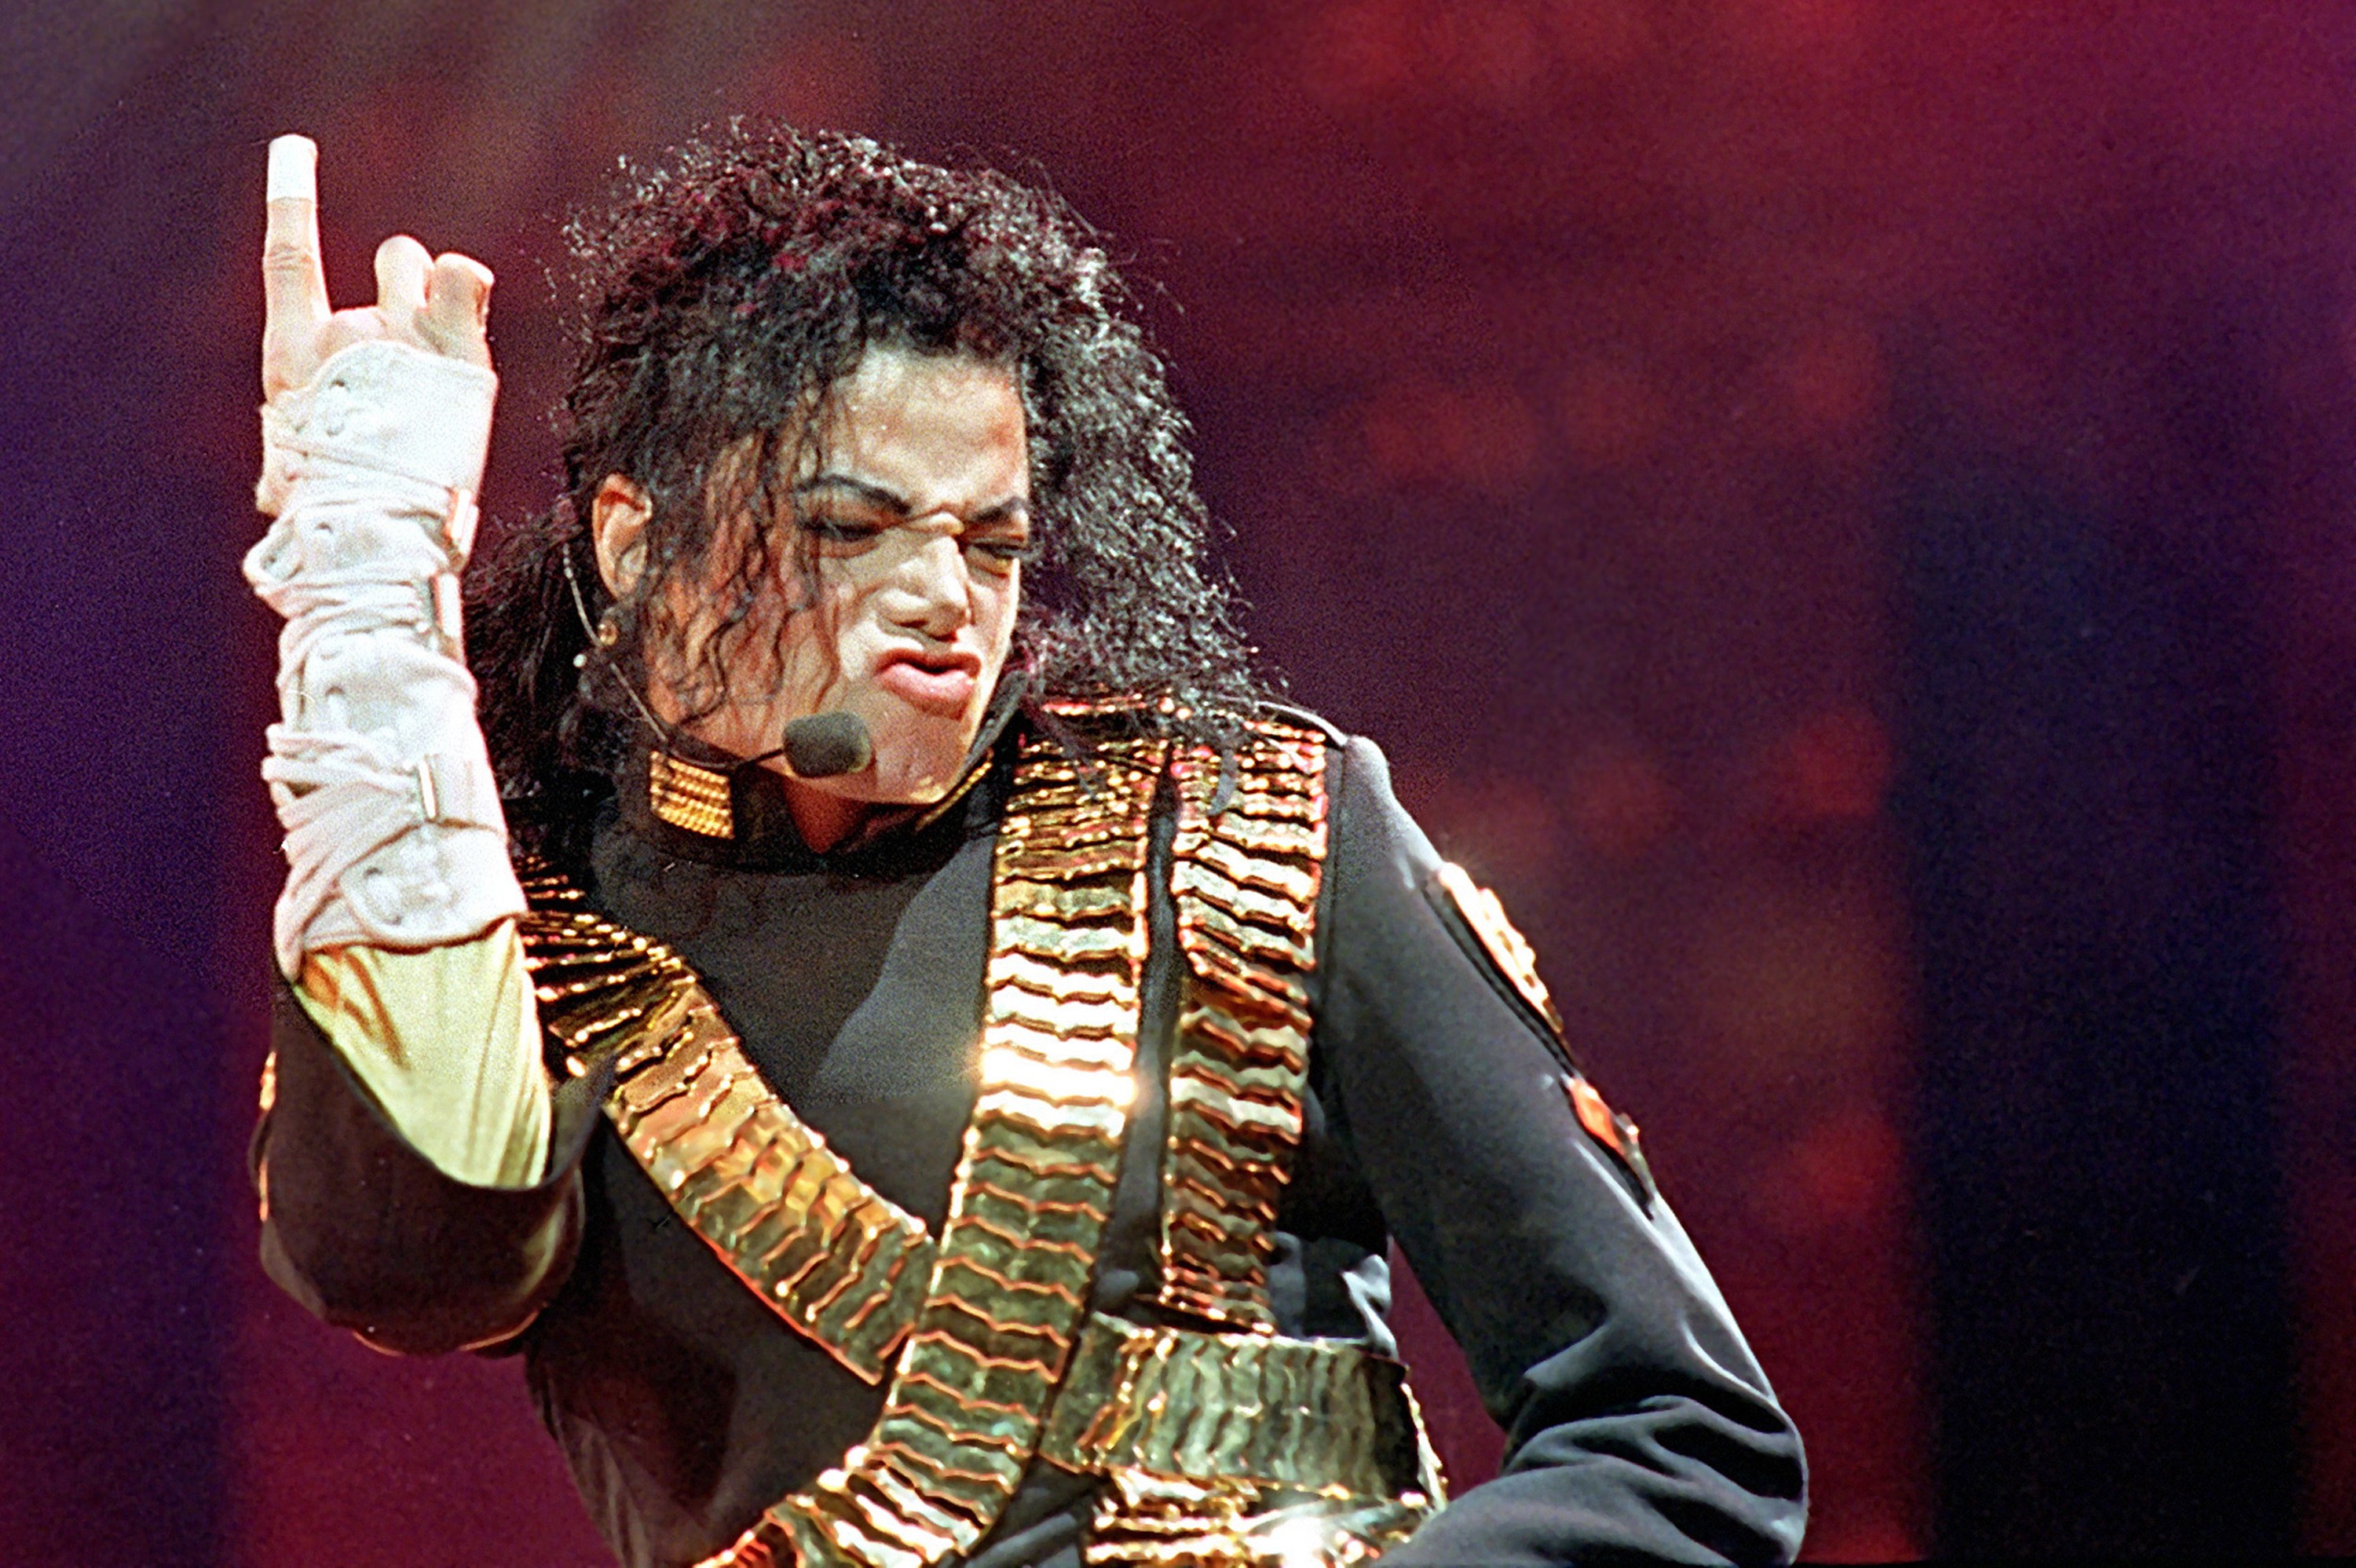 Michael Jackson, trayectoria musical, imágenes, música